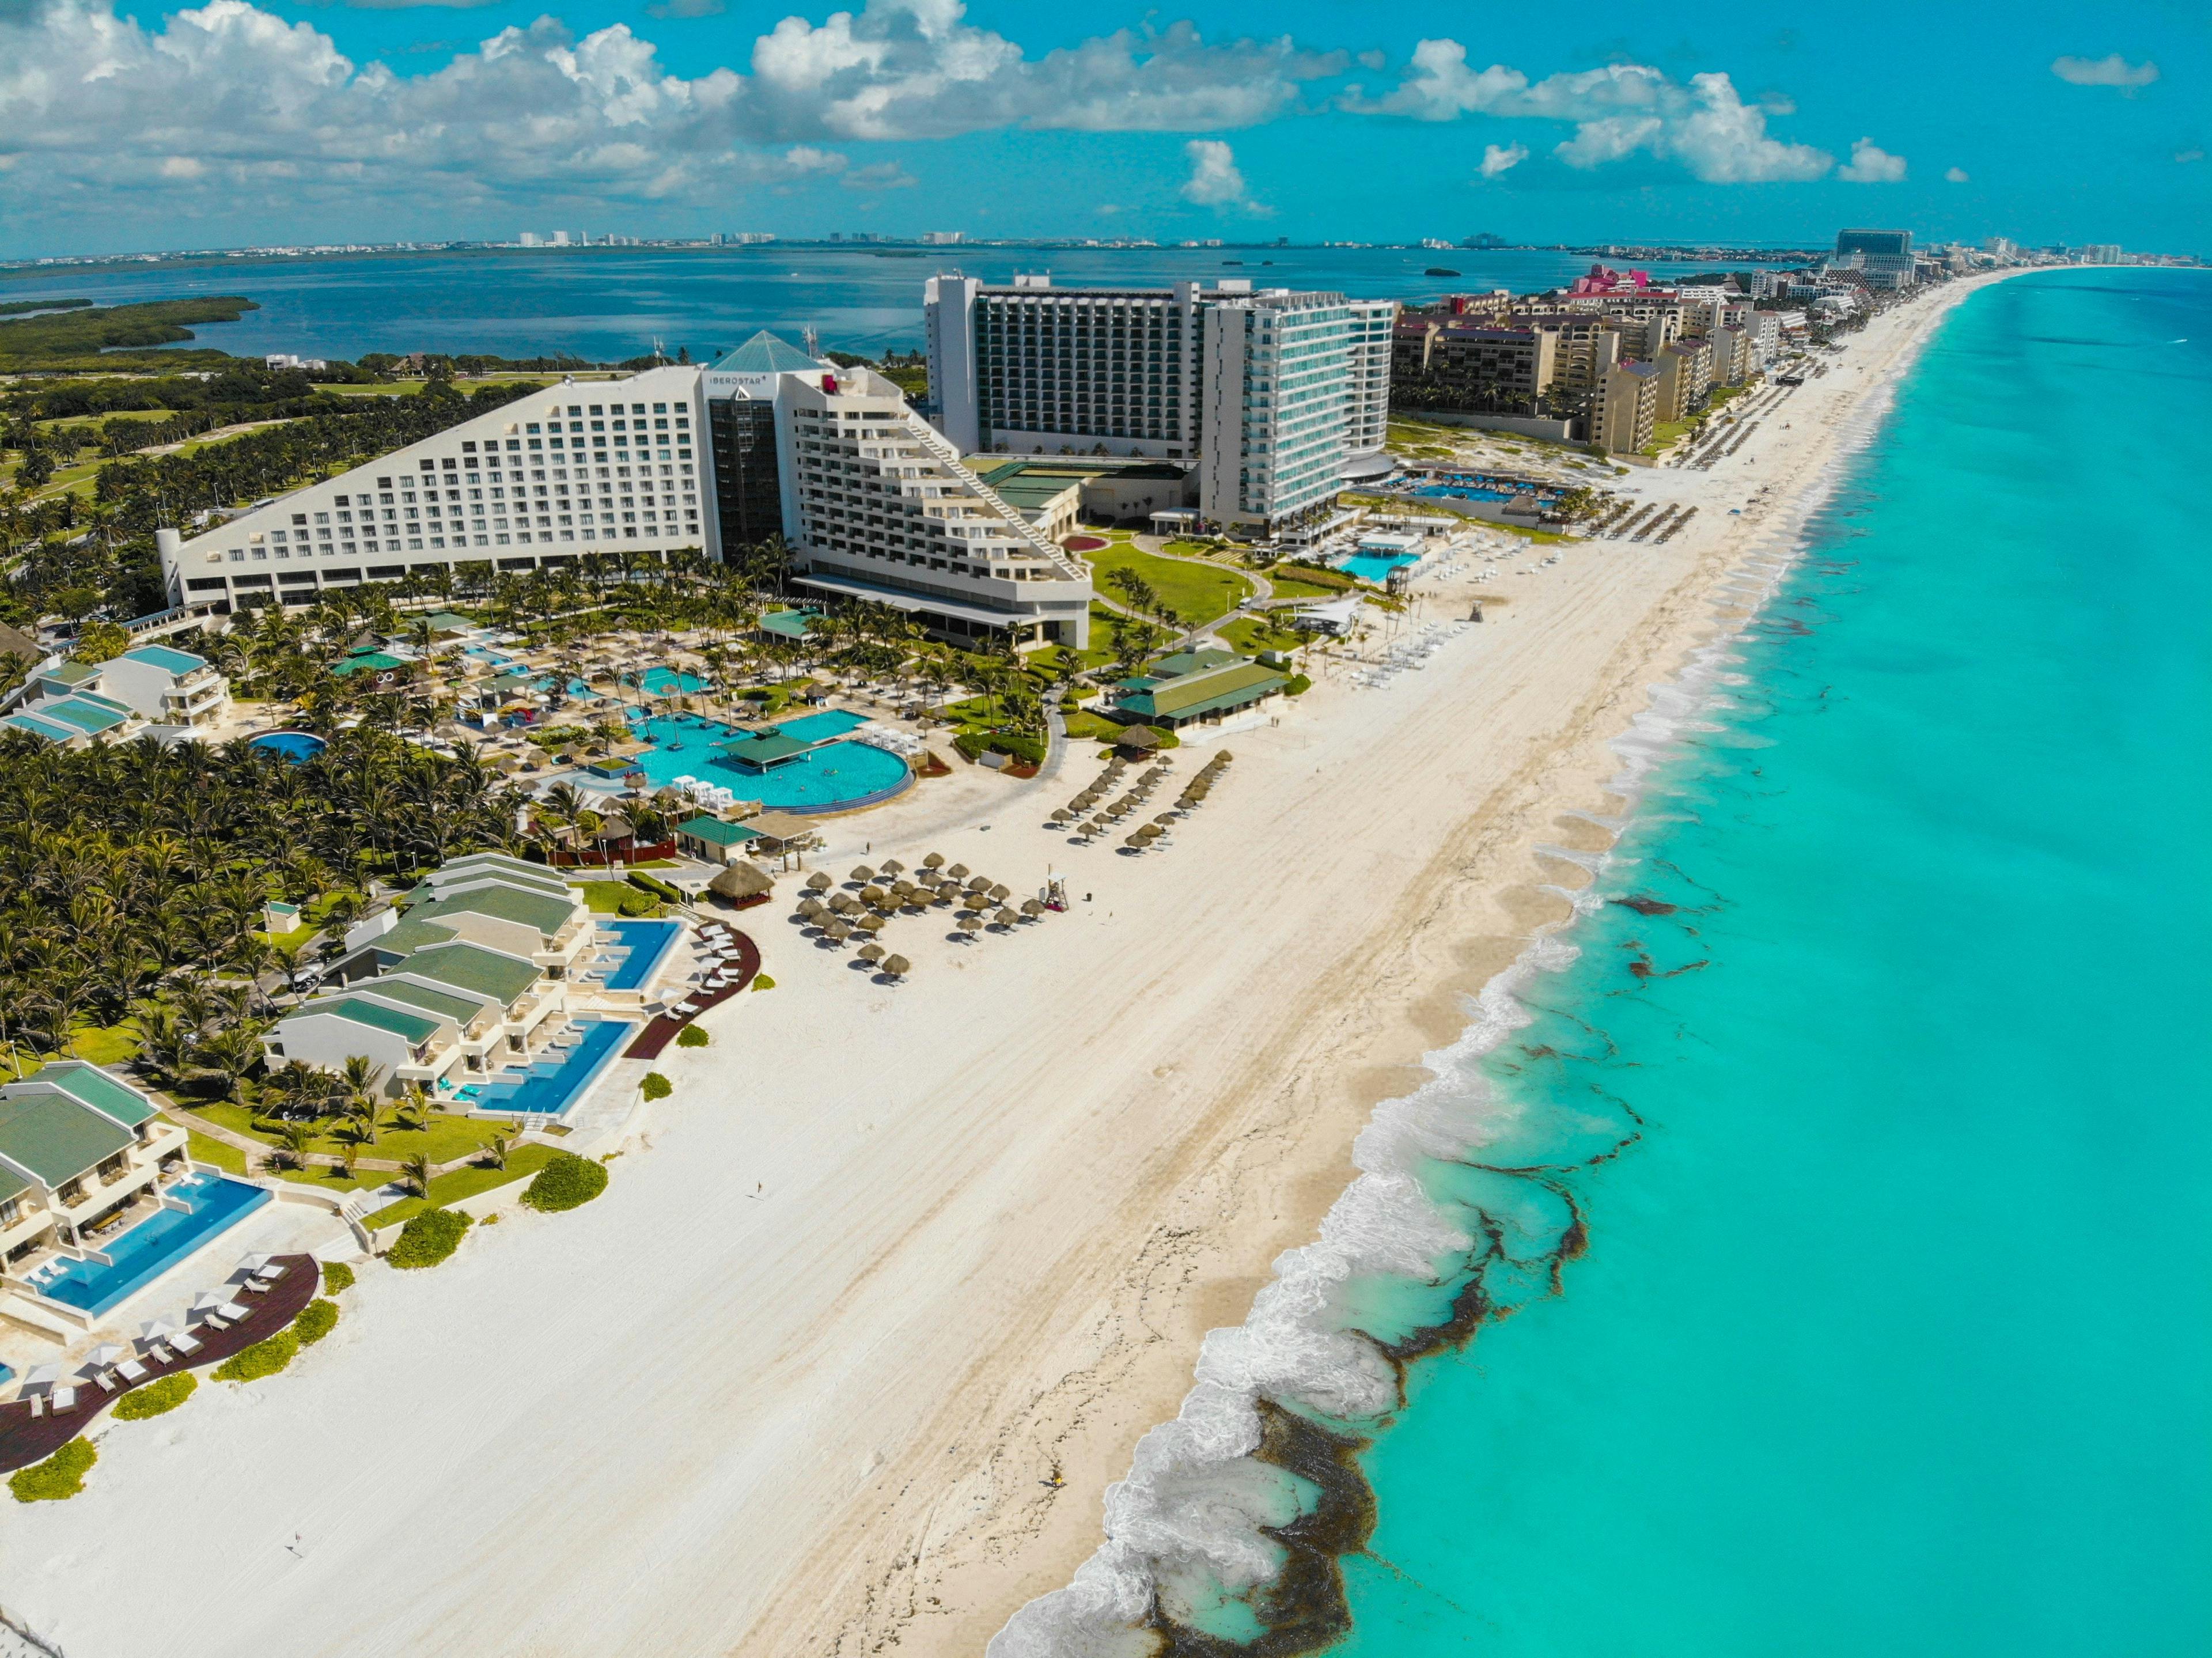 Zona Hotelera in Cancun with bright blue Caribbean Sea